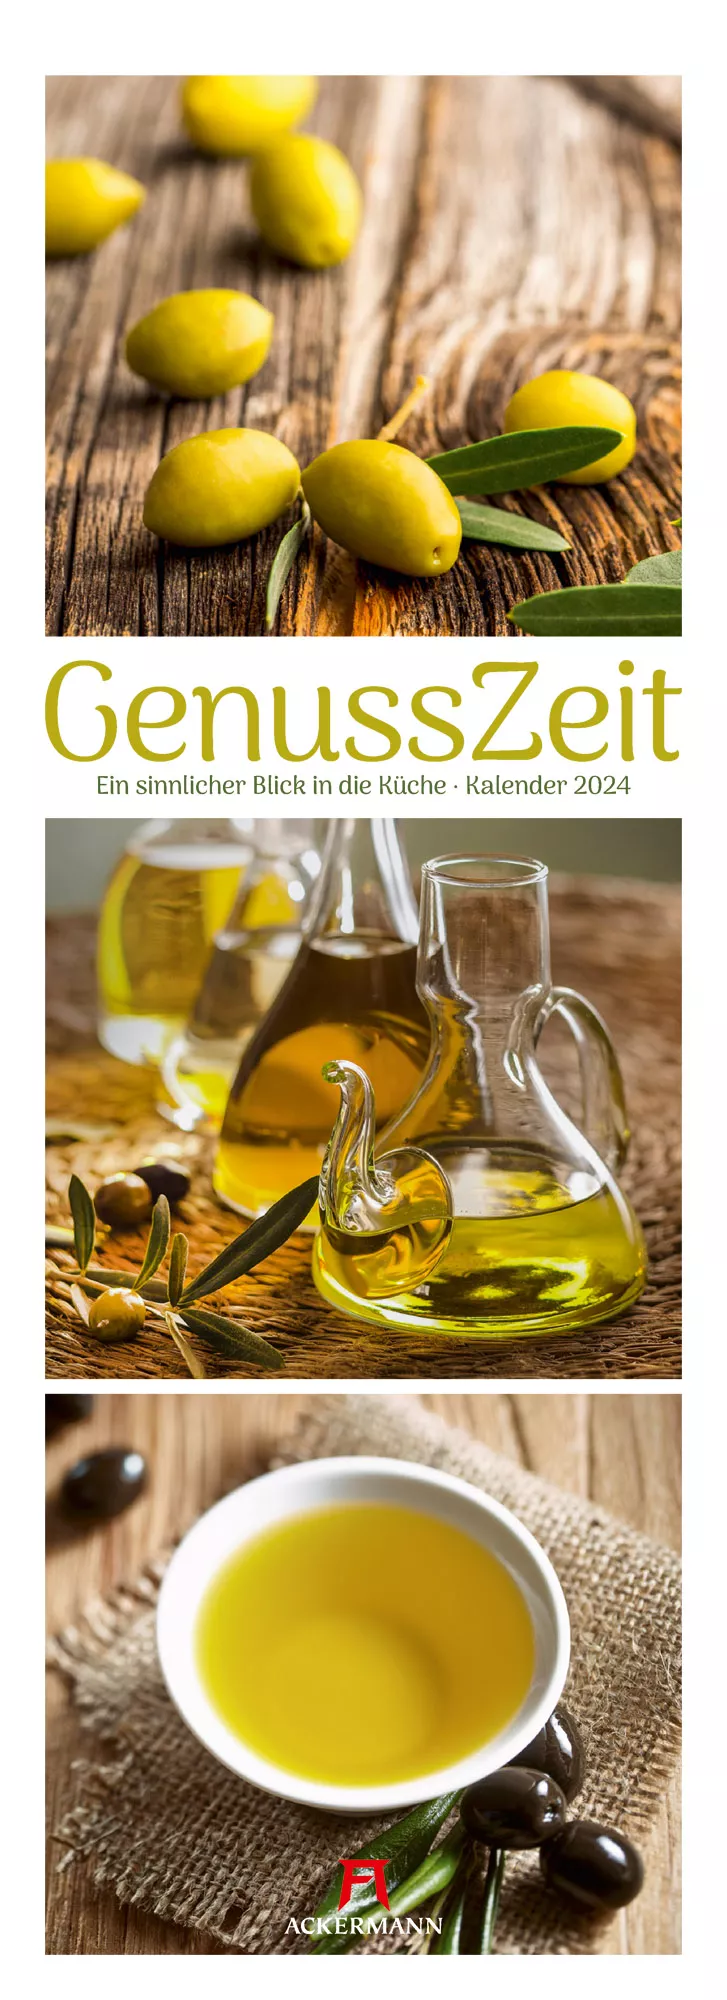 Ackermann Kalender GenussZeit 2024 - Titelblatt